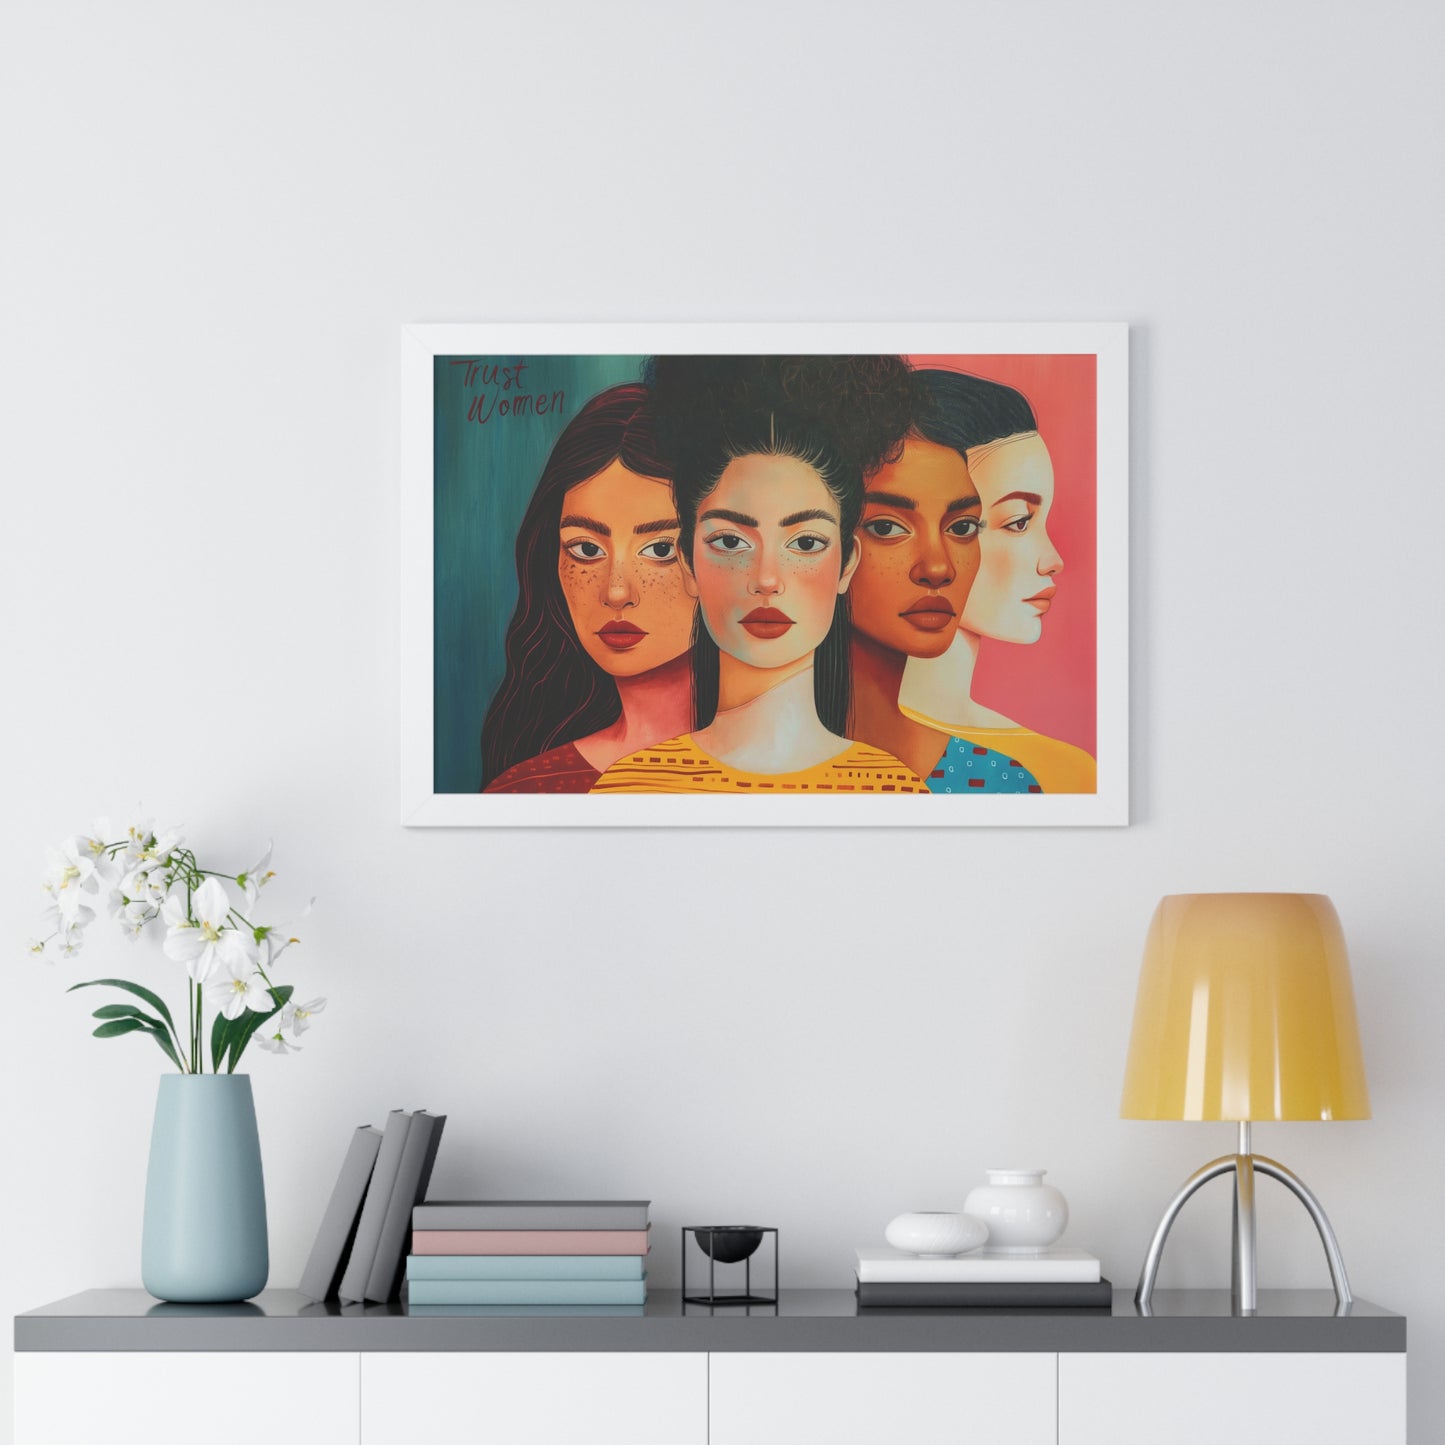 Trust Women! Activist Inspiration Framed Horizontal Poster |36x20| Expressionist Style Evocative Political Art